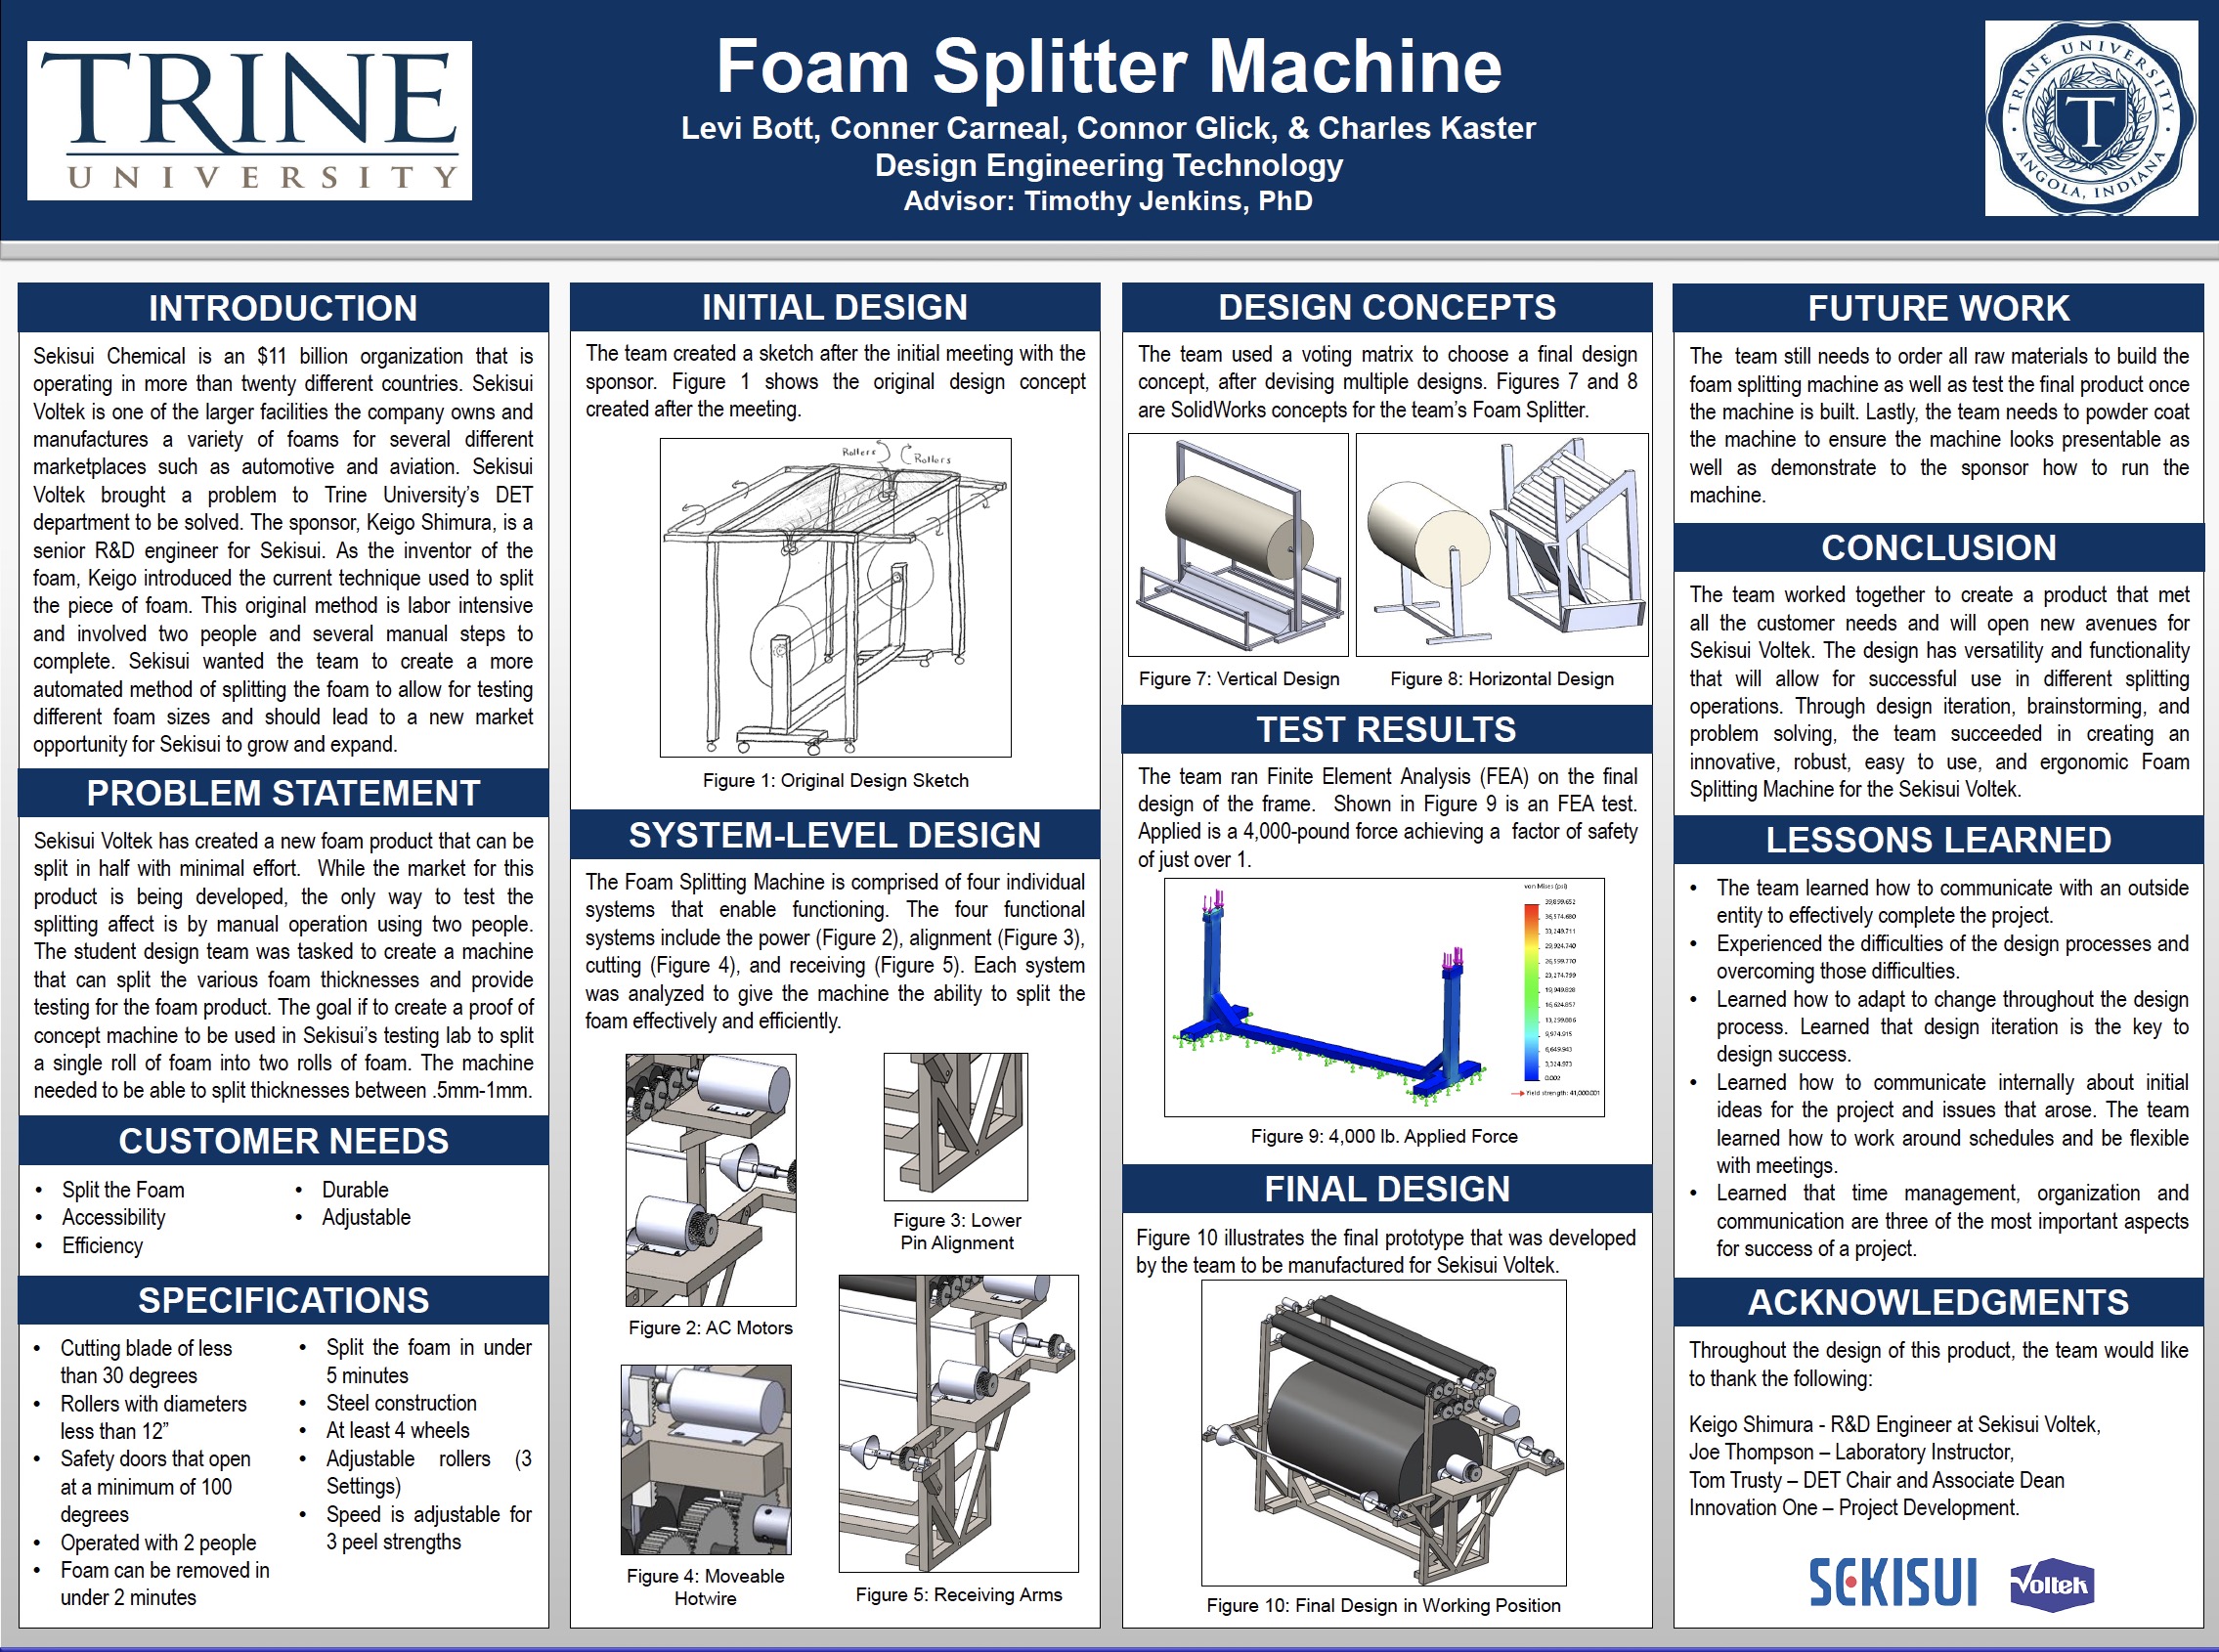 Foam Splitter Poster